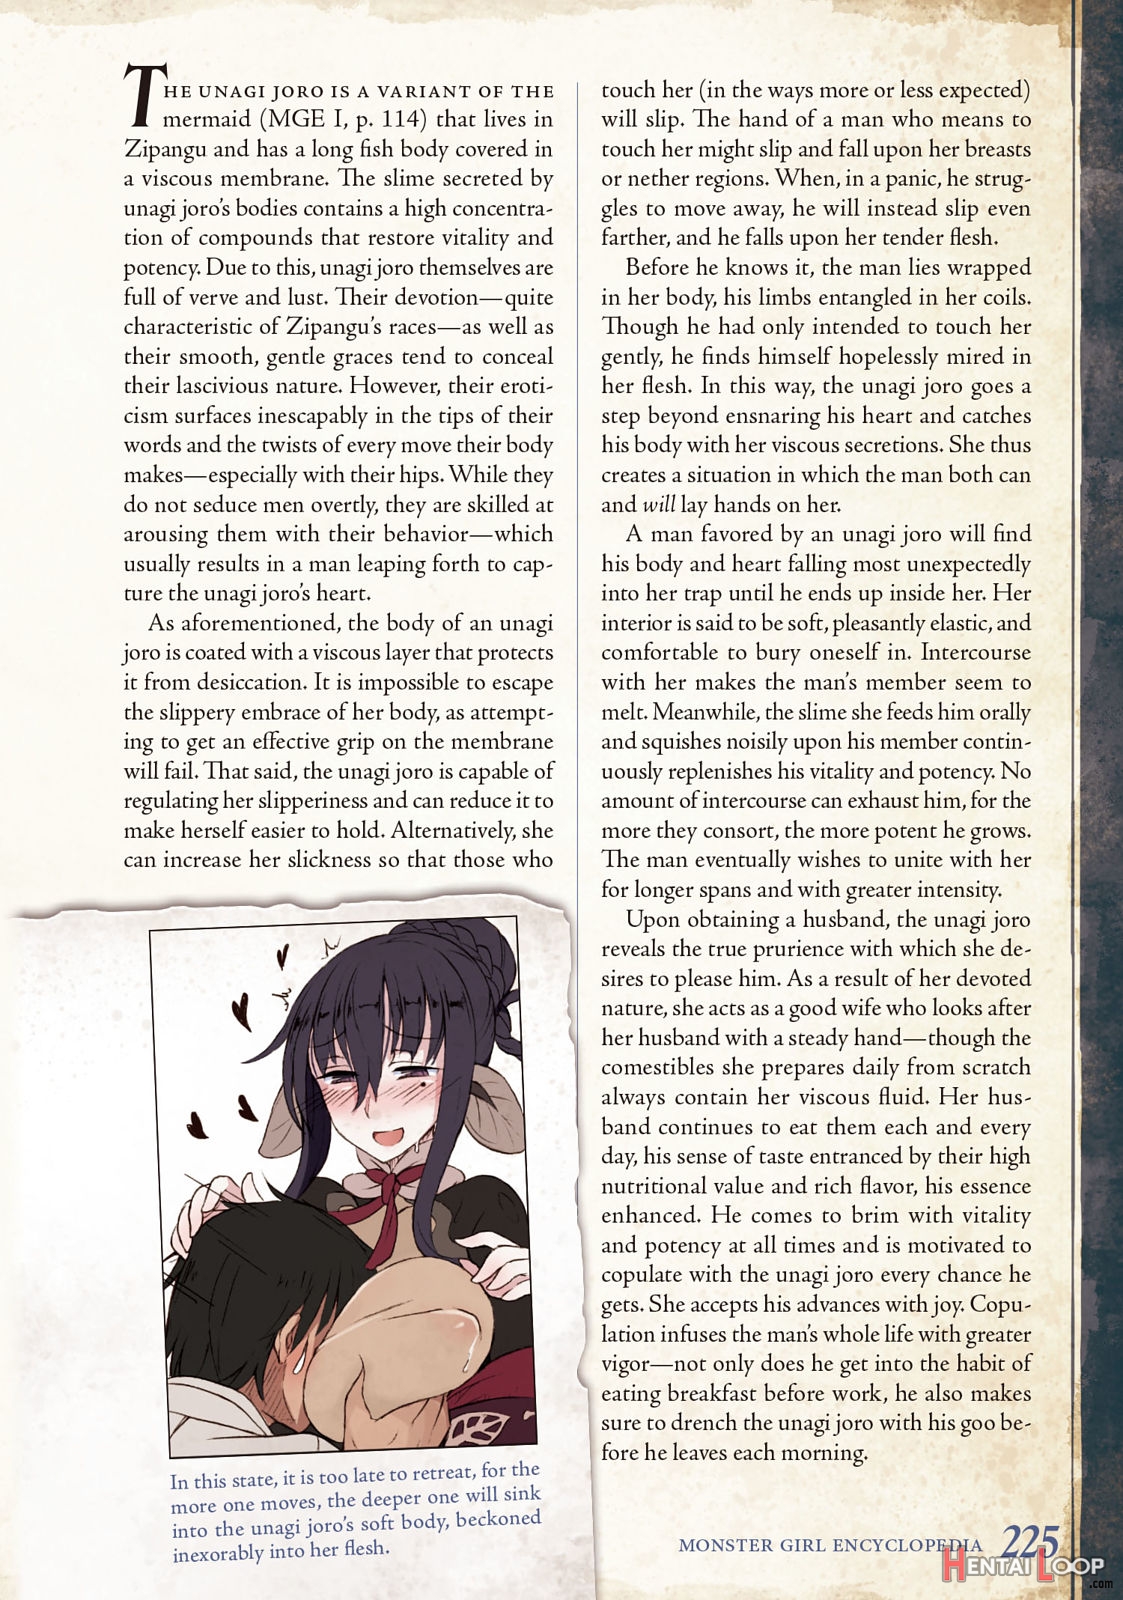 Monster Girl Encyclopedia Vol. 2 page 226